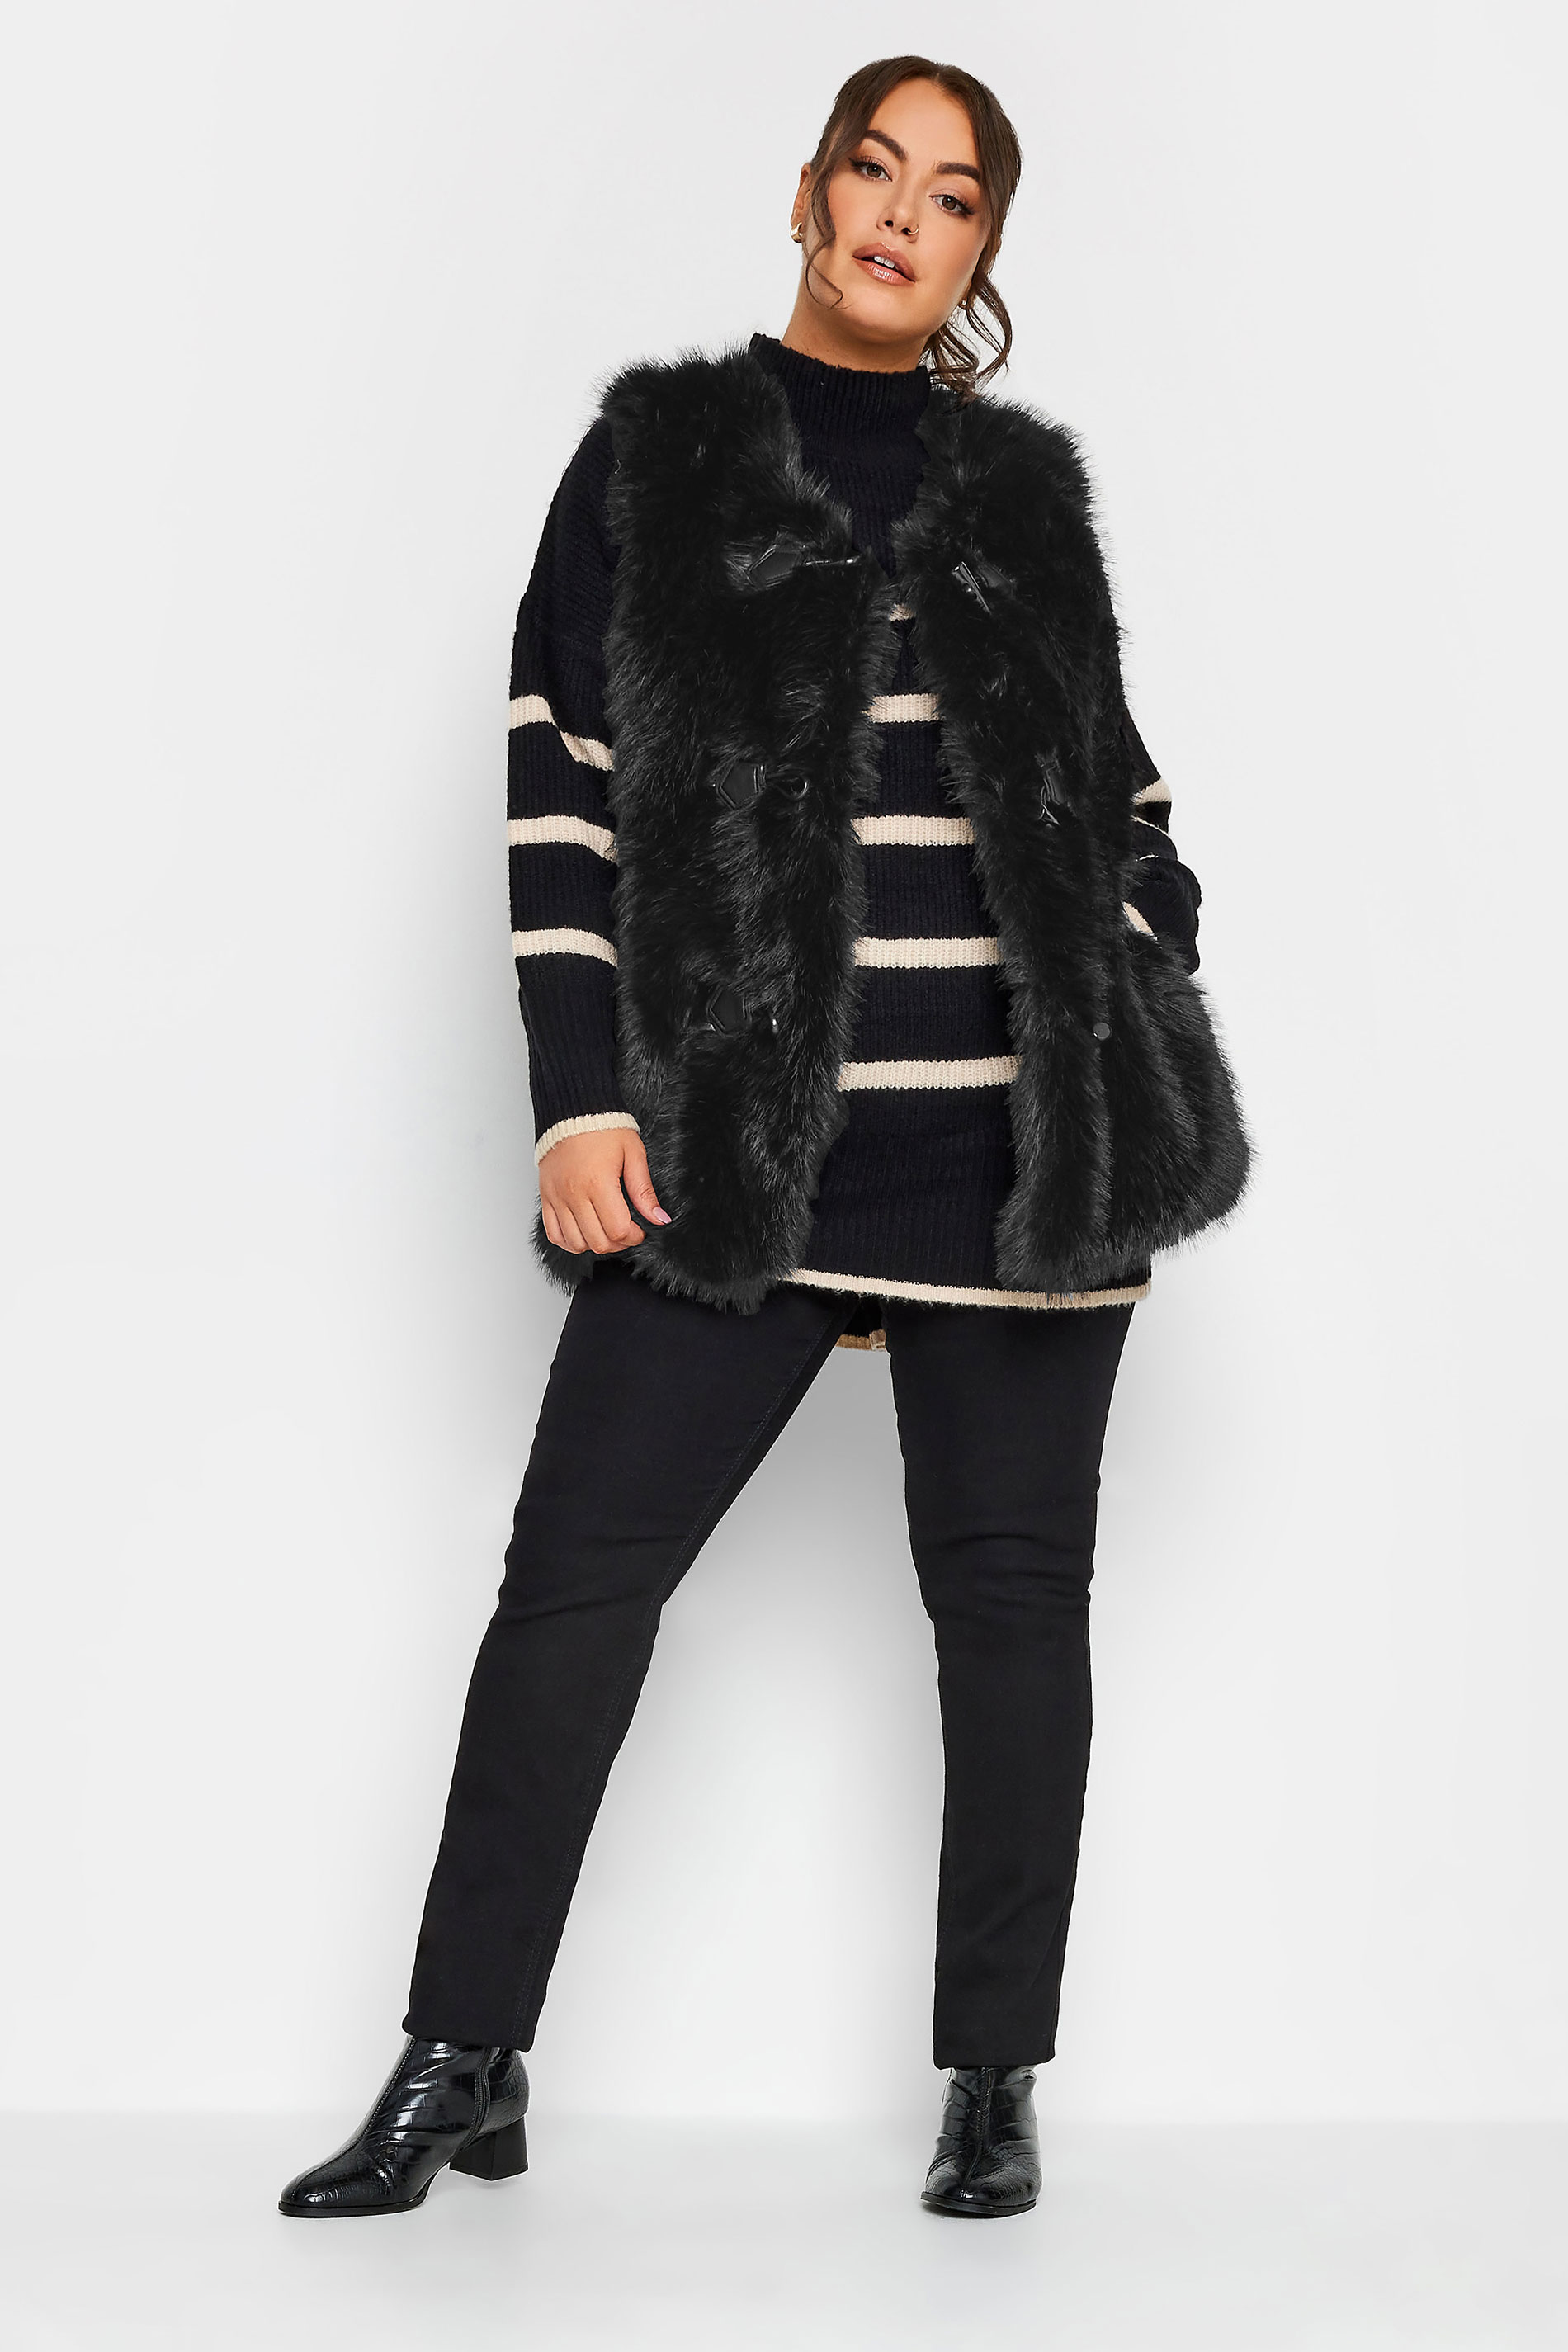 YOURS Plus Size Black Faux Fur Gilet | Yours Clothing 2